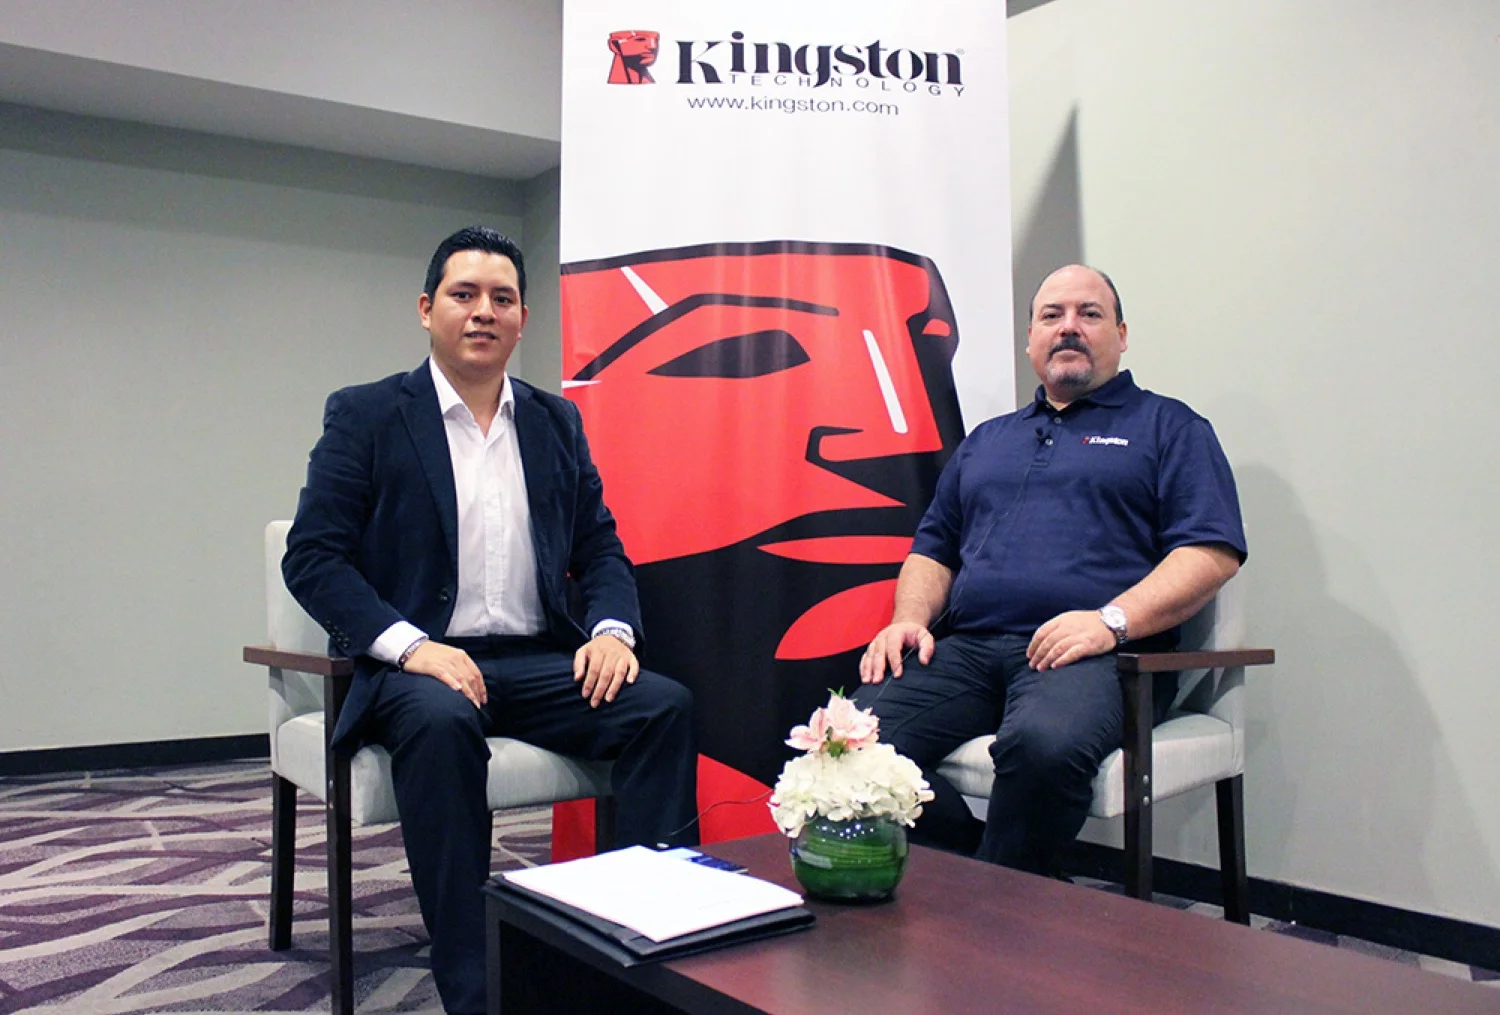 Entrevista a José Luis Fernández de Kingston Technology